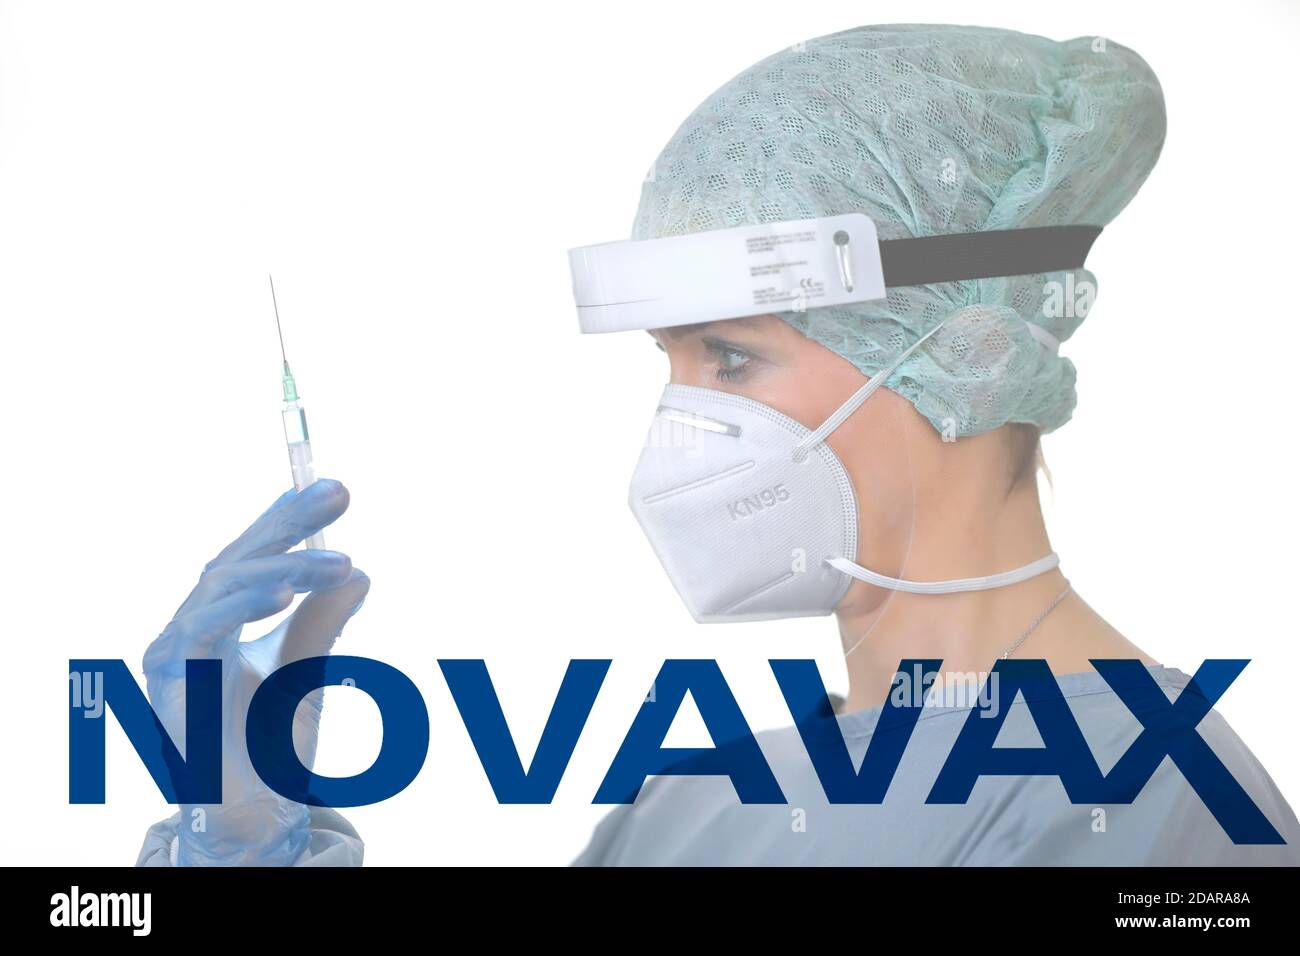 Image symbole vaccin Corona de NOVAVAX, femme avec seringue, crise corona, Bade-Wurtemberg, Allemagne Banque D'Images